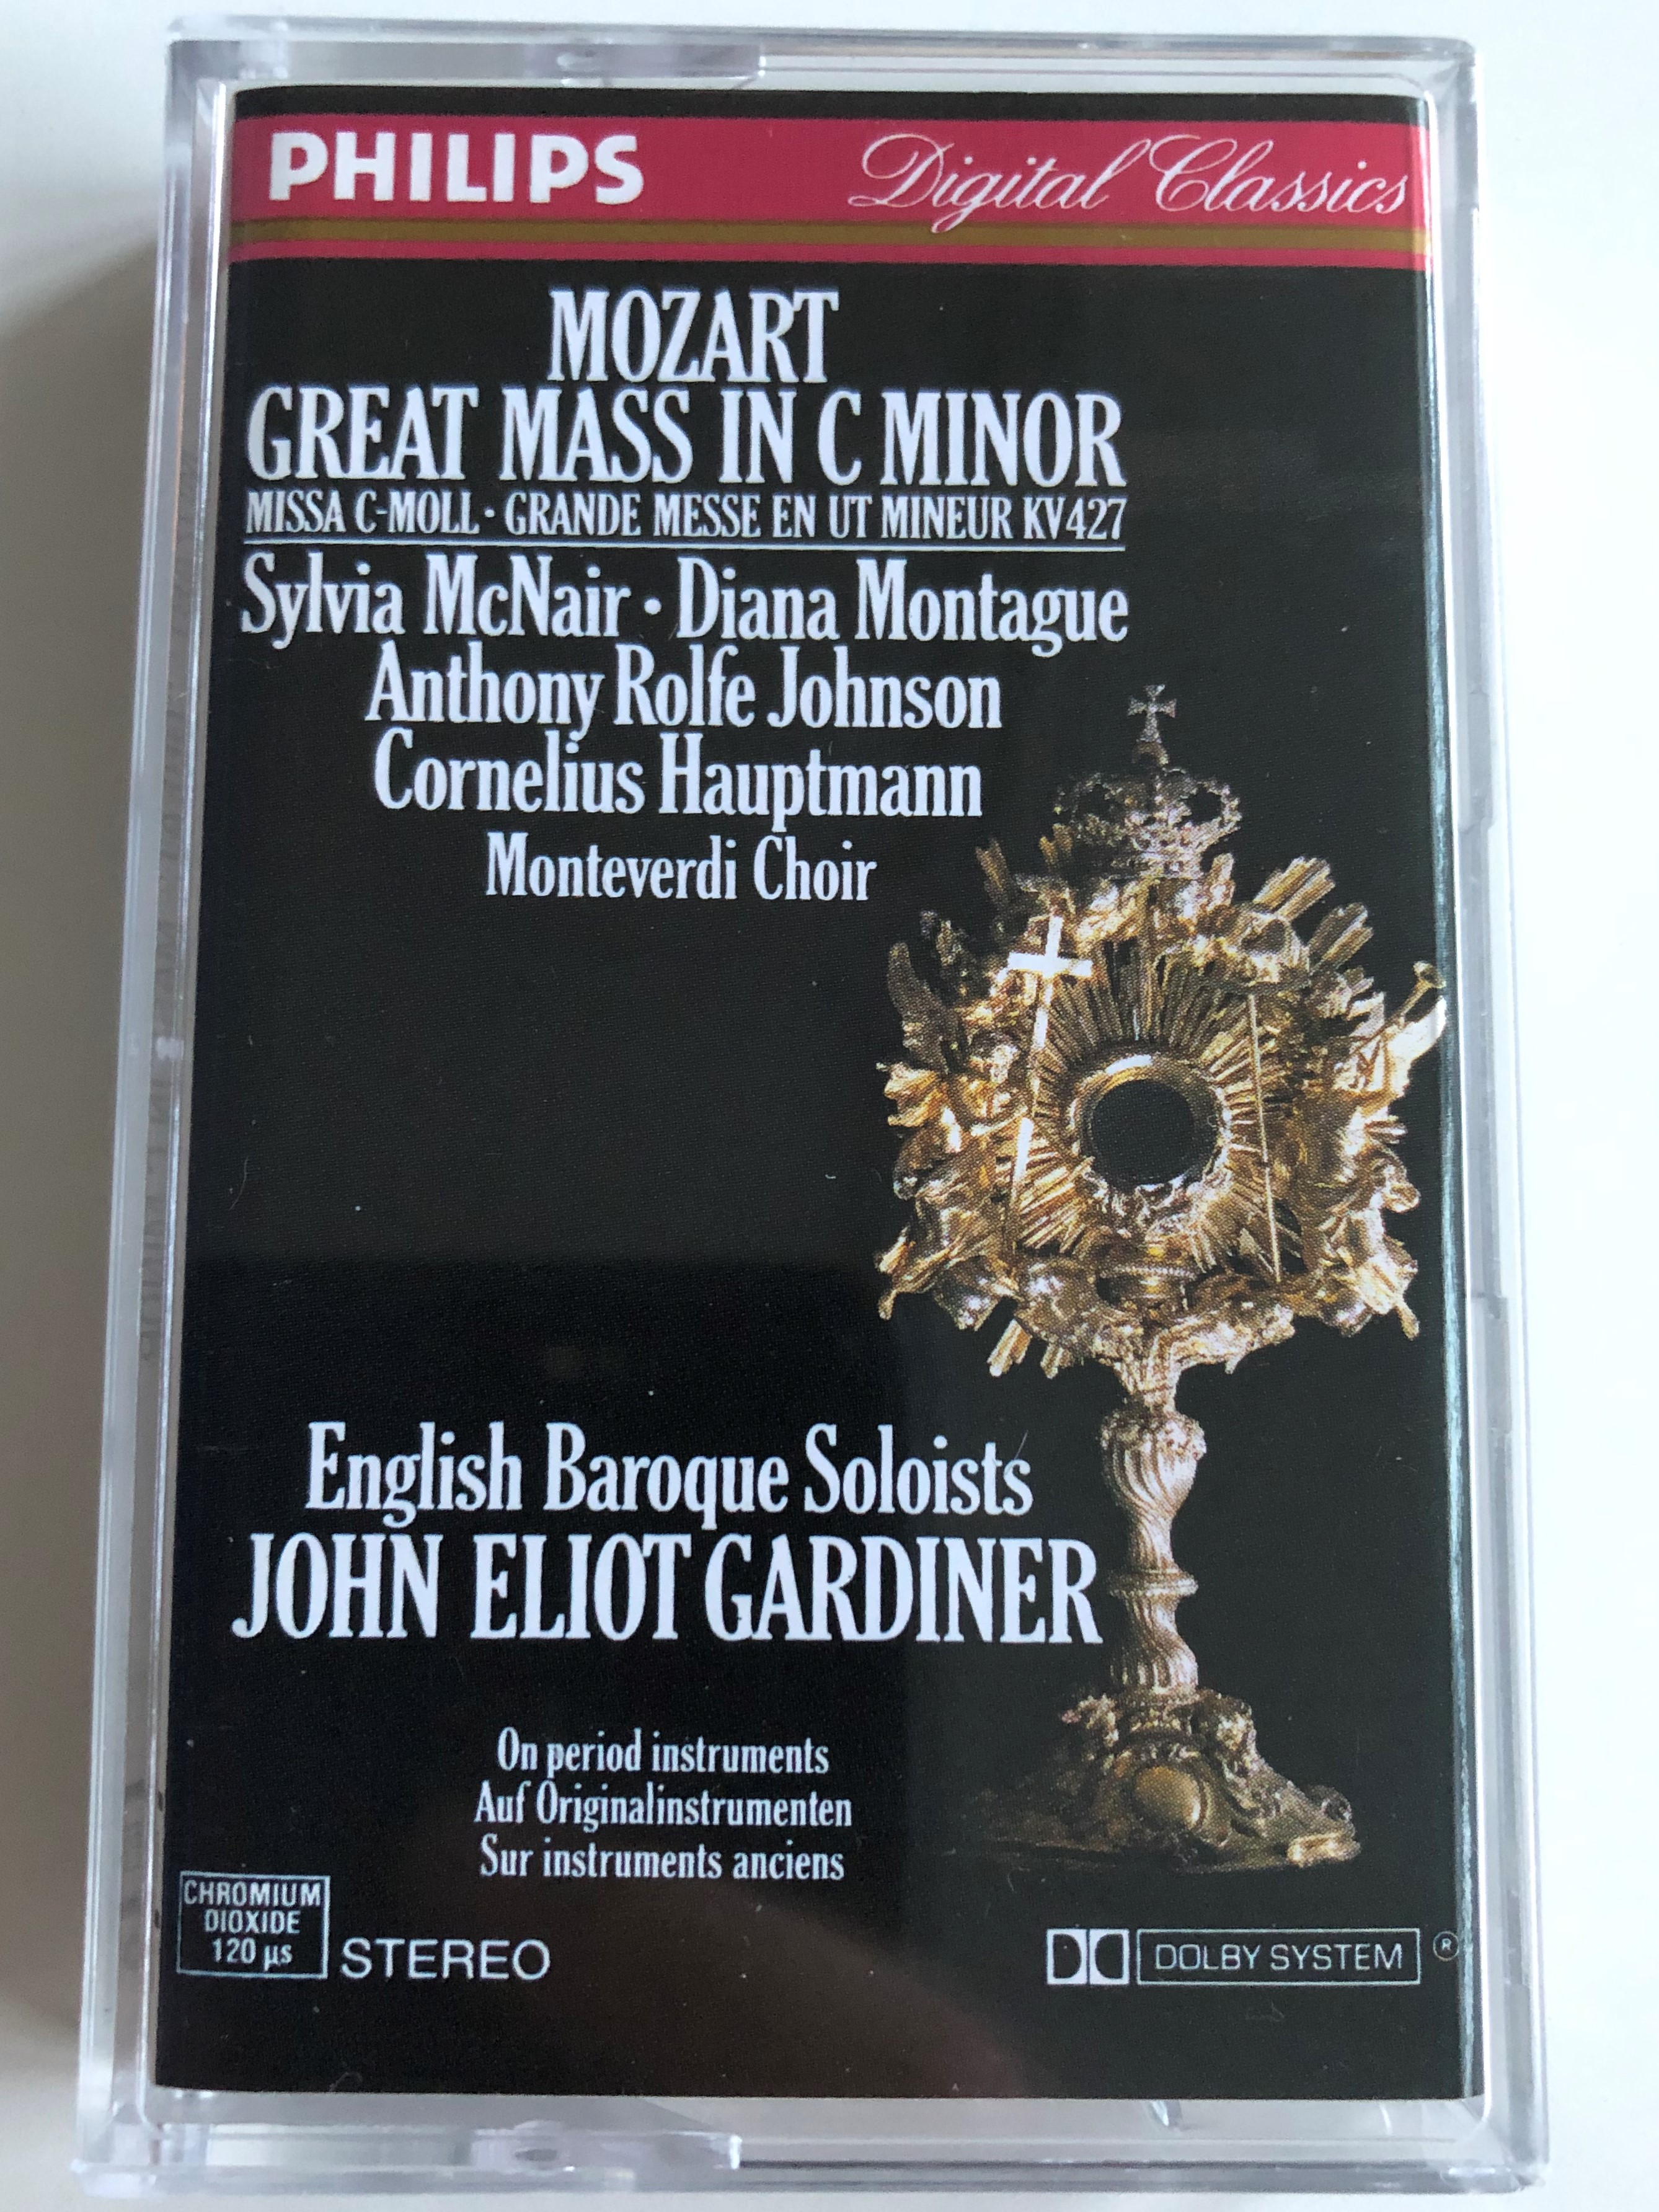 mozart-great-mass-in-c-minor-kv-427-sylvia-mcnair-diana-montague-anthony-rolfe-johnson-cornelius-hauptmann-monteverdi-choir-english-baroque-soloists-john-eliot-gardiner-philips-casset-1-.jpg